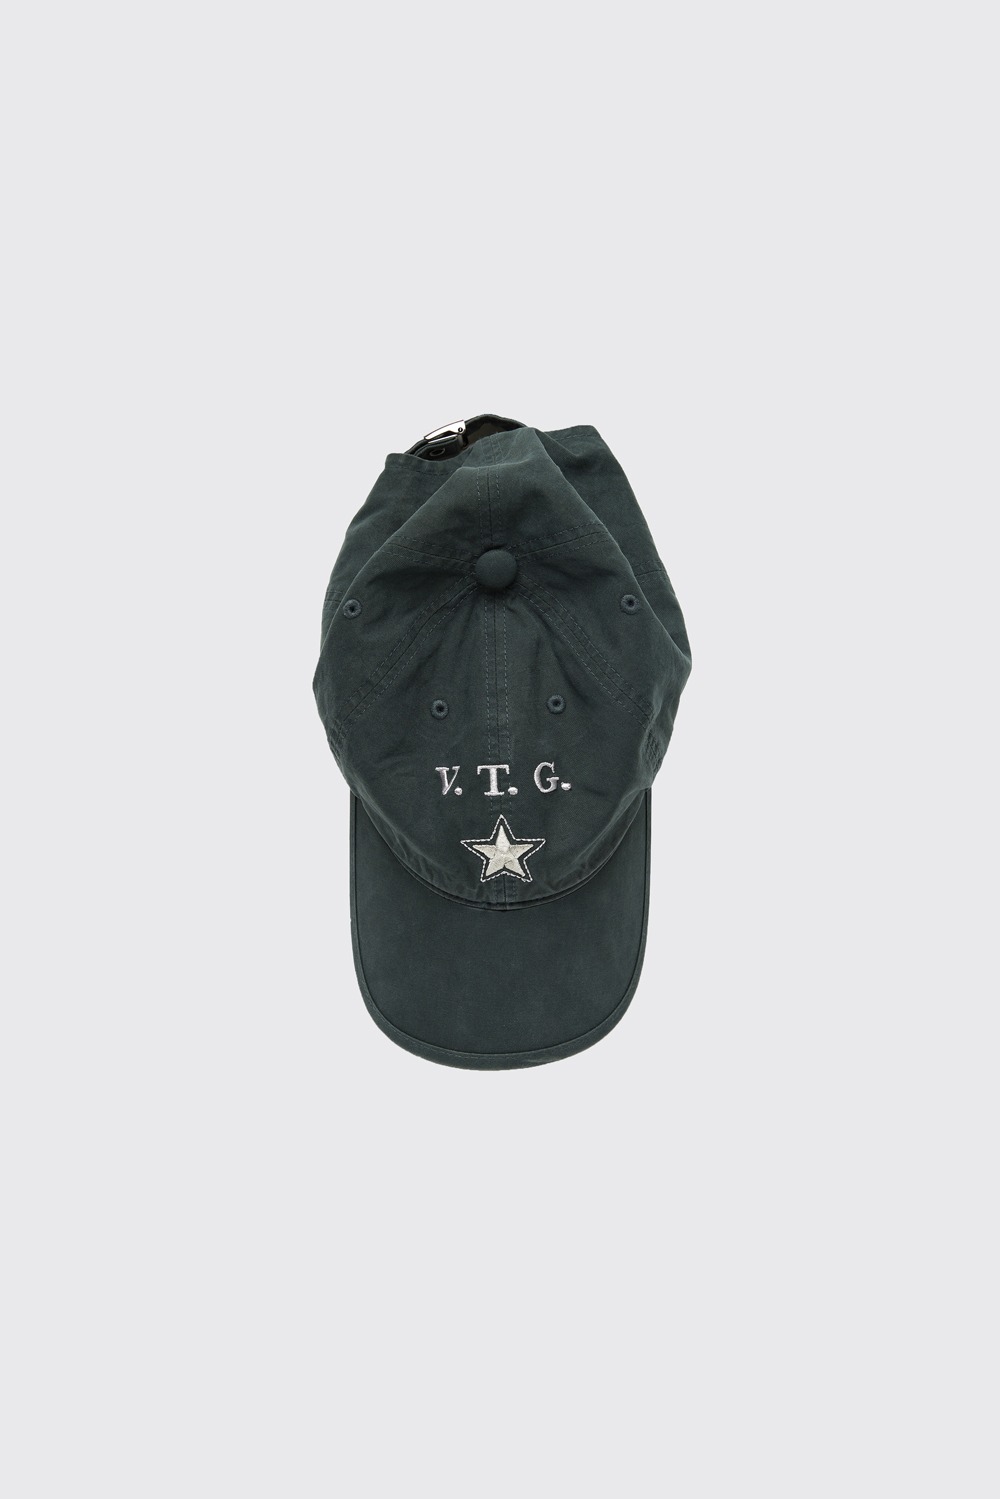 VTG Star Cap Washed Dark Green